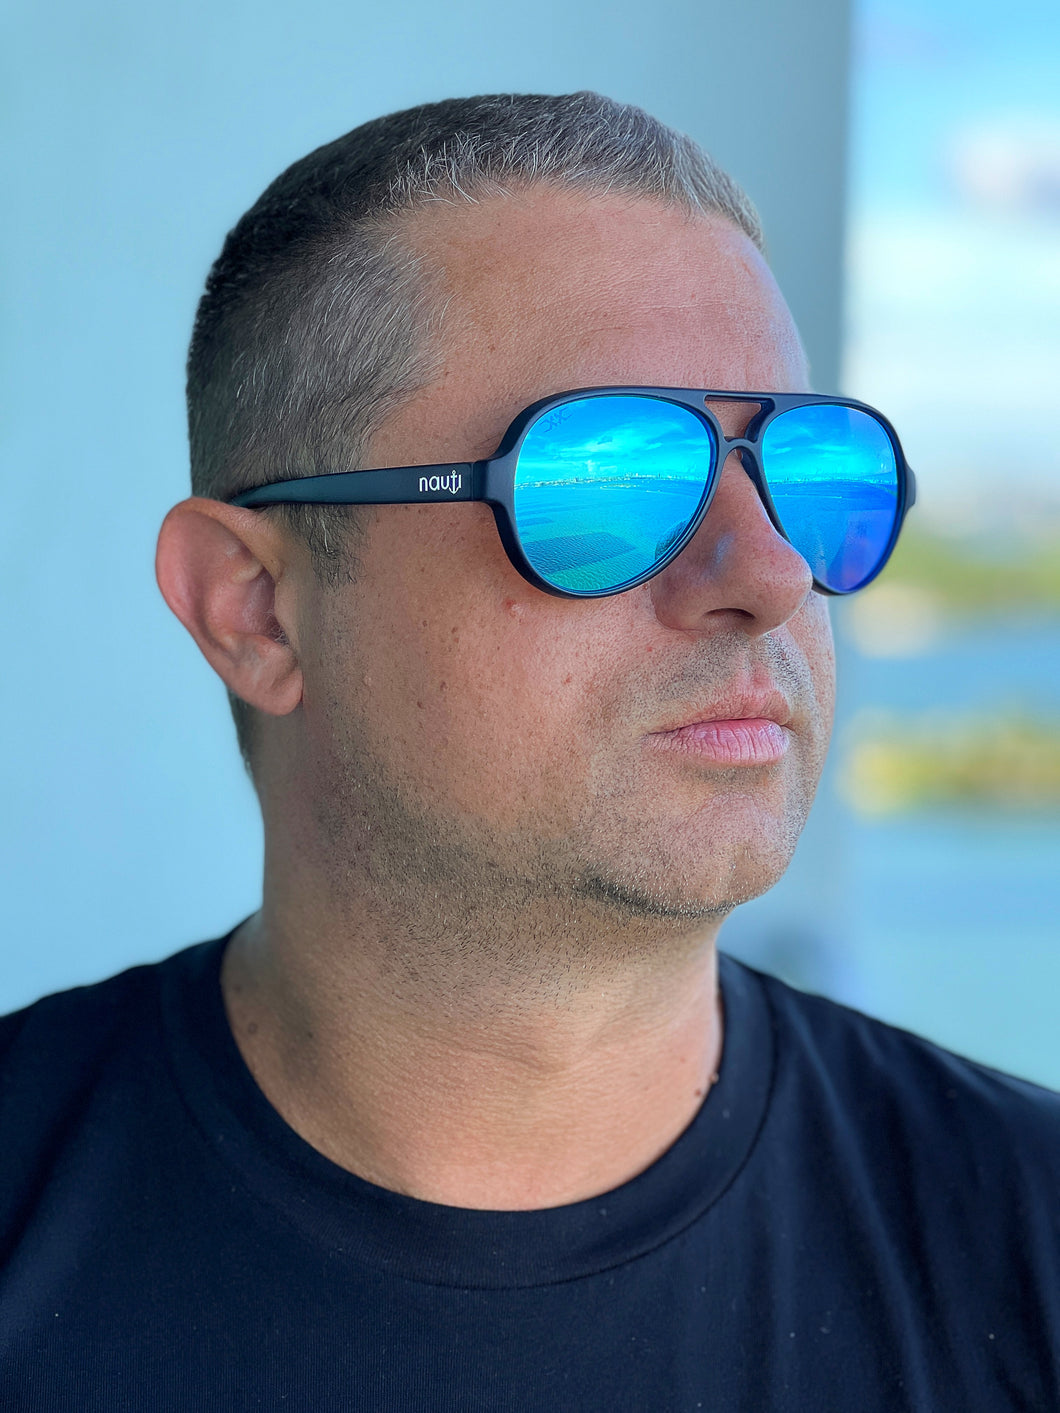 Joopin Polarized Sports Sunglasses for Men Women Classic Transparent Frame  UV400 Mirrored Lens (Clear Mirrored Purple) - Walmart.com